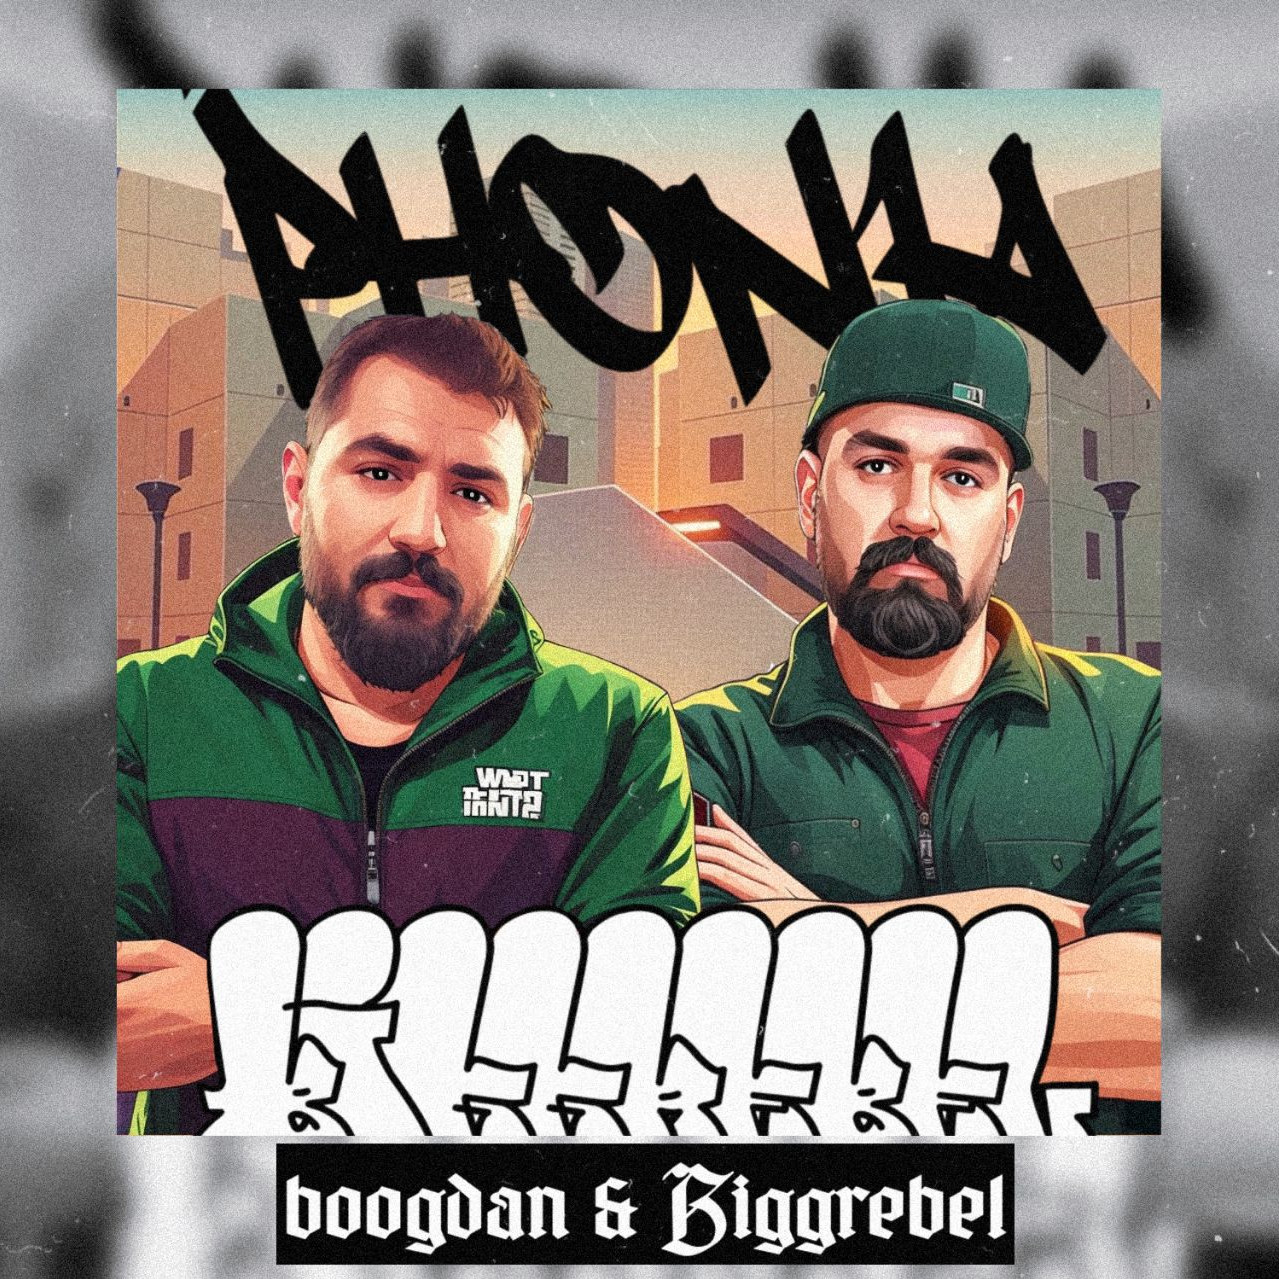 Biggrebel & Boogdan - Phobia